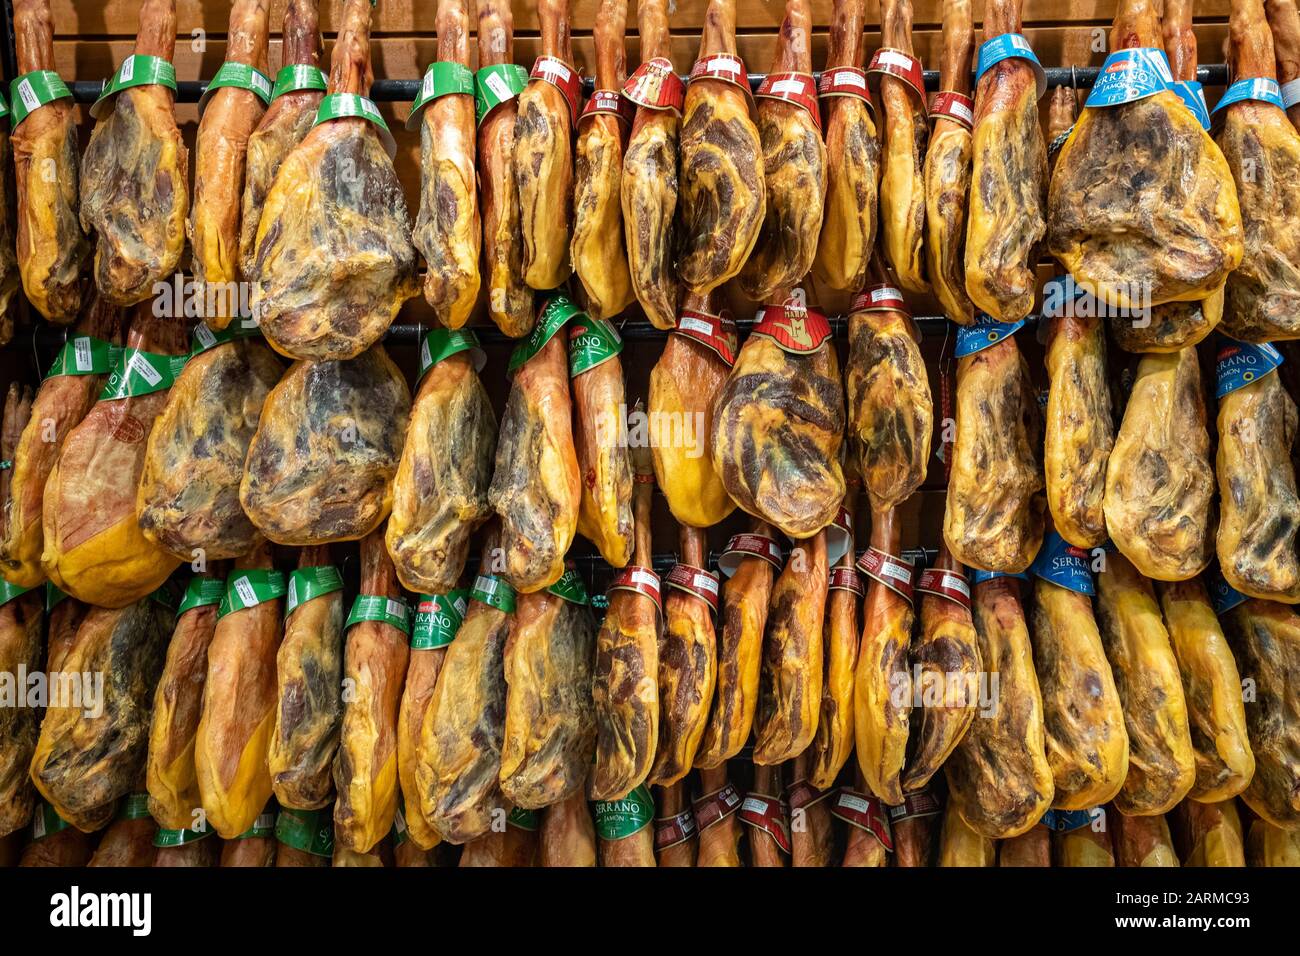 Barcelona, Spain - October 19, 2019: Jamon, spanish cured ham at grocery market Stock Photo